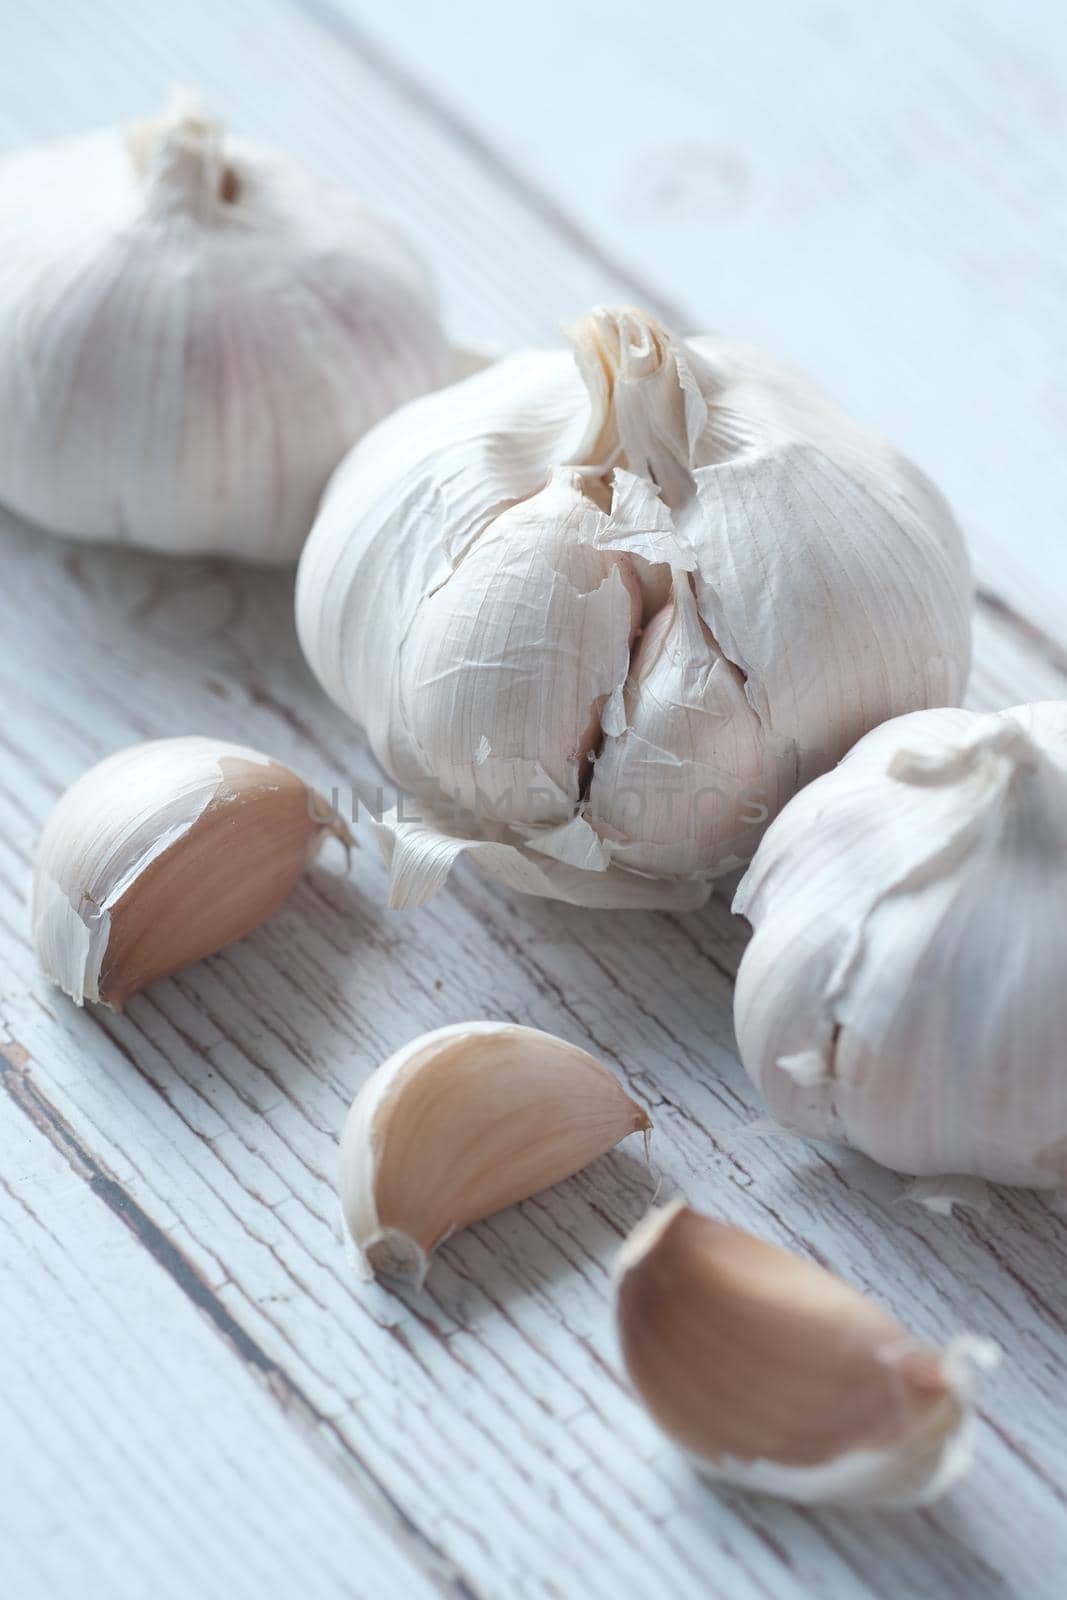 close up pf garlic on white background,,